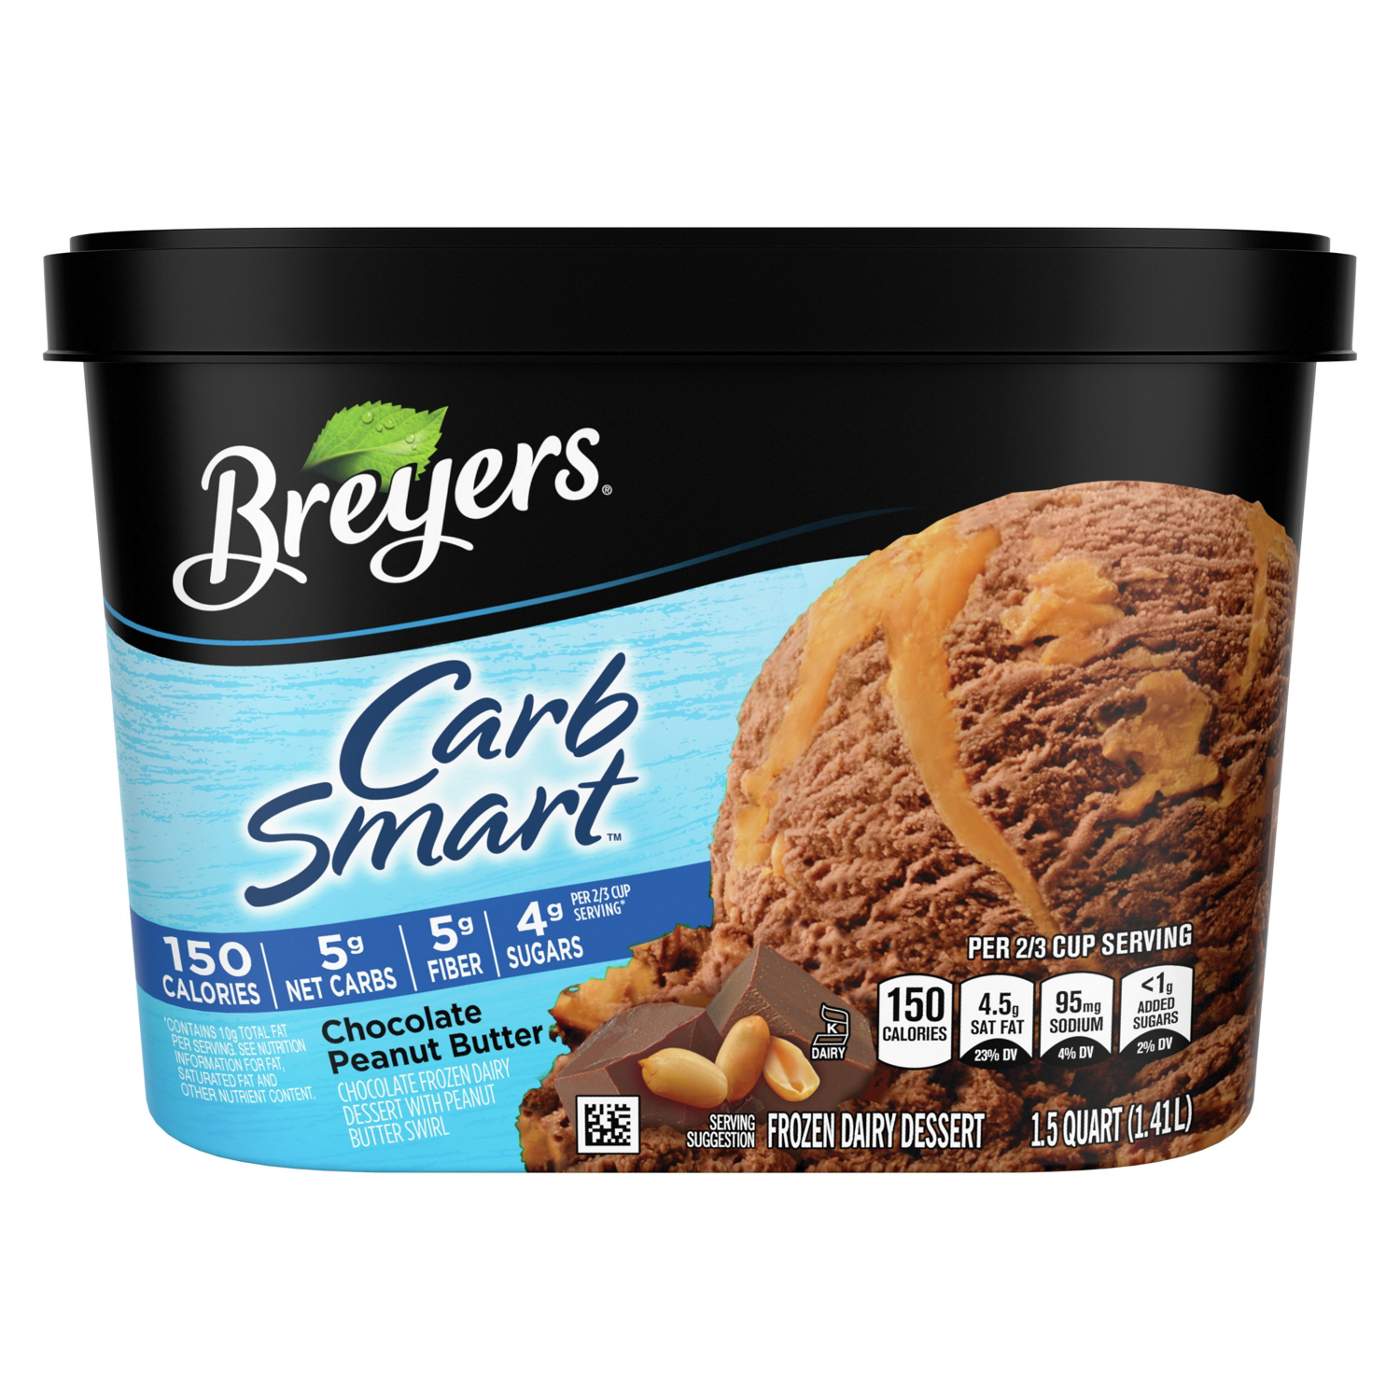 Breyers Carb Smart Chocolate Peanut Butter Frozen Dairy Dessert; image 6 of 6